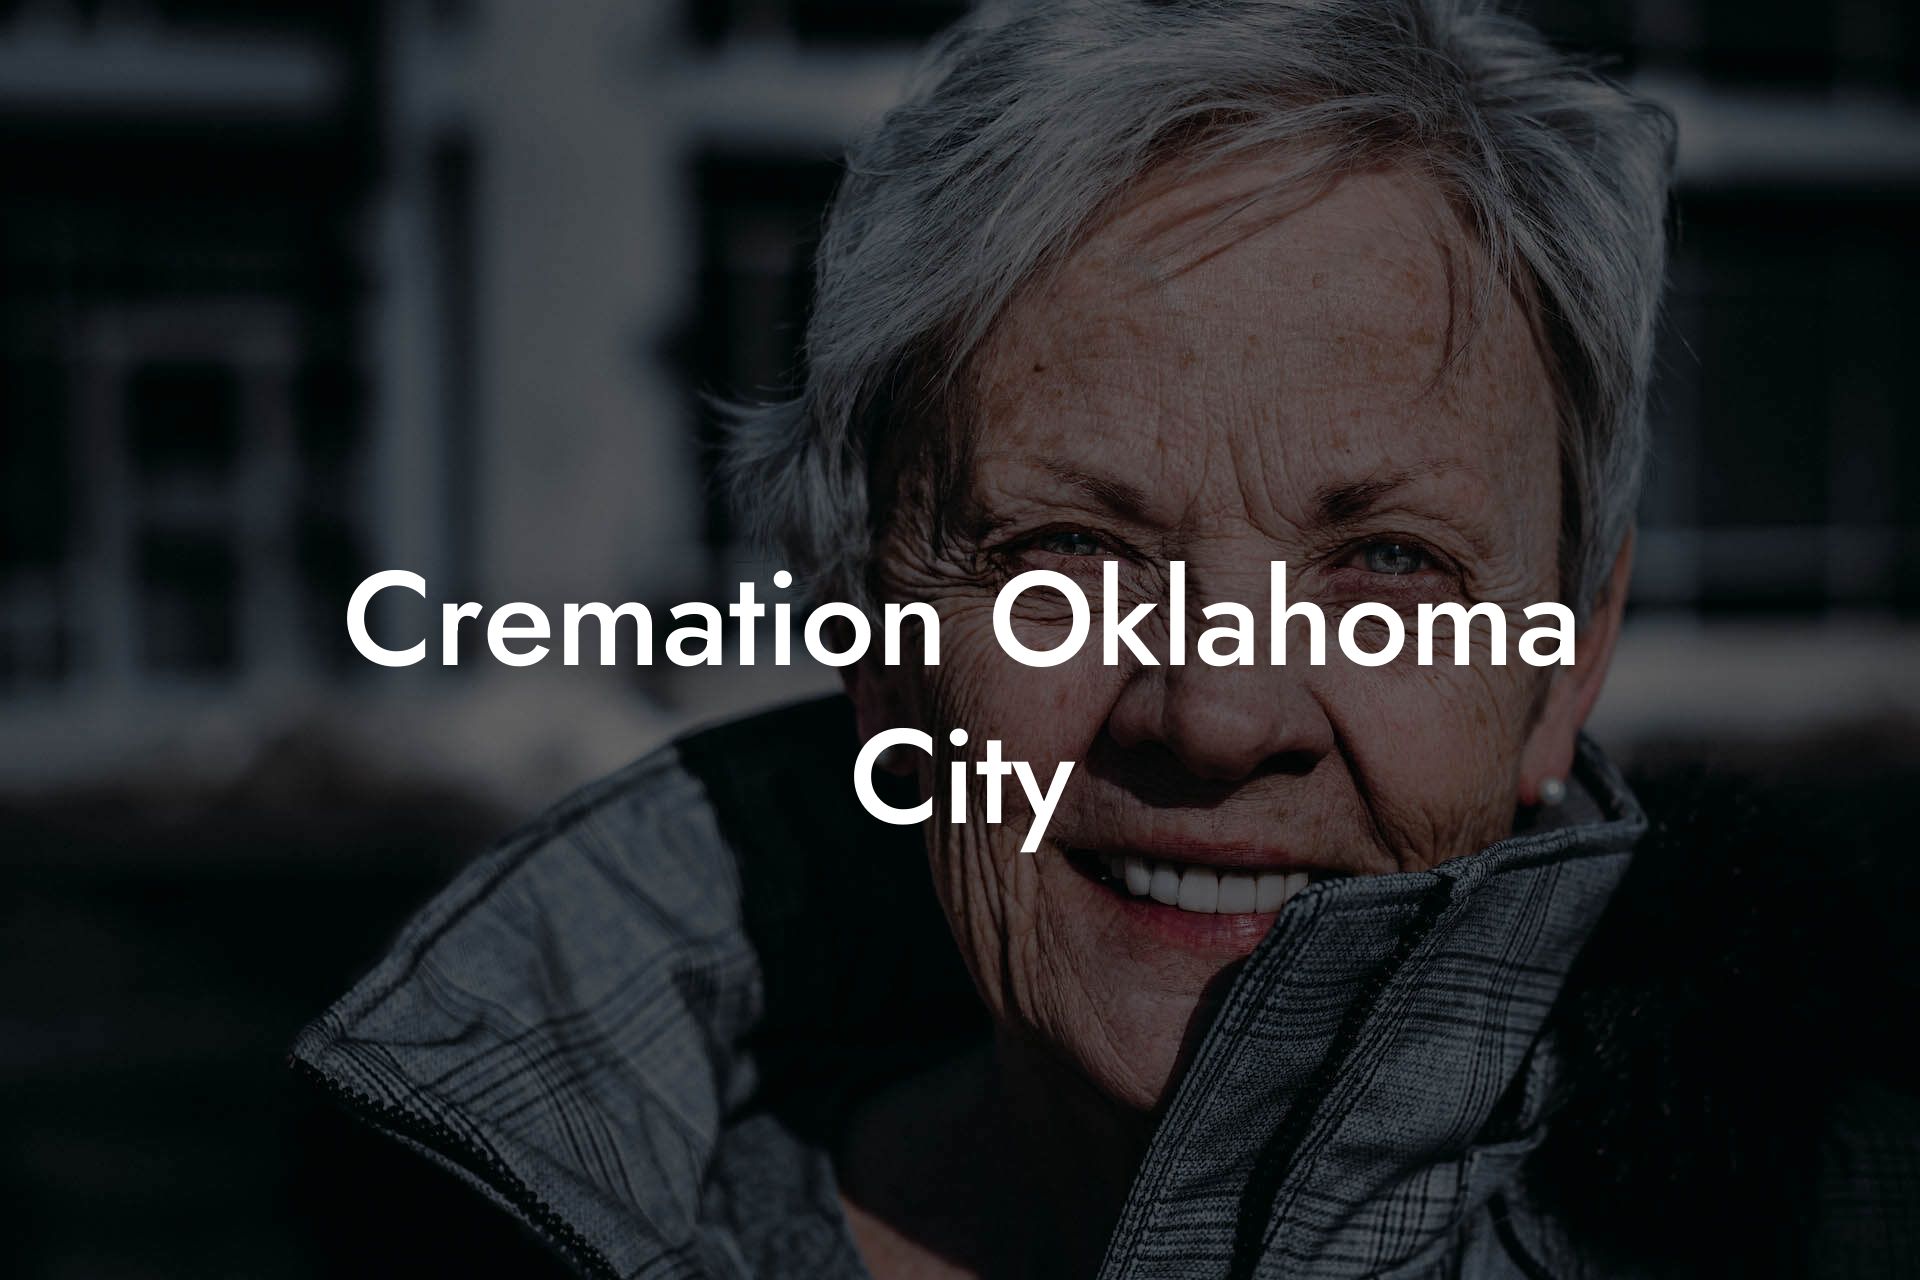 Cremation Oklahoma City